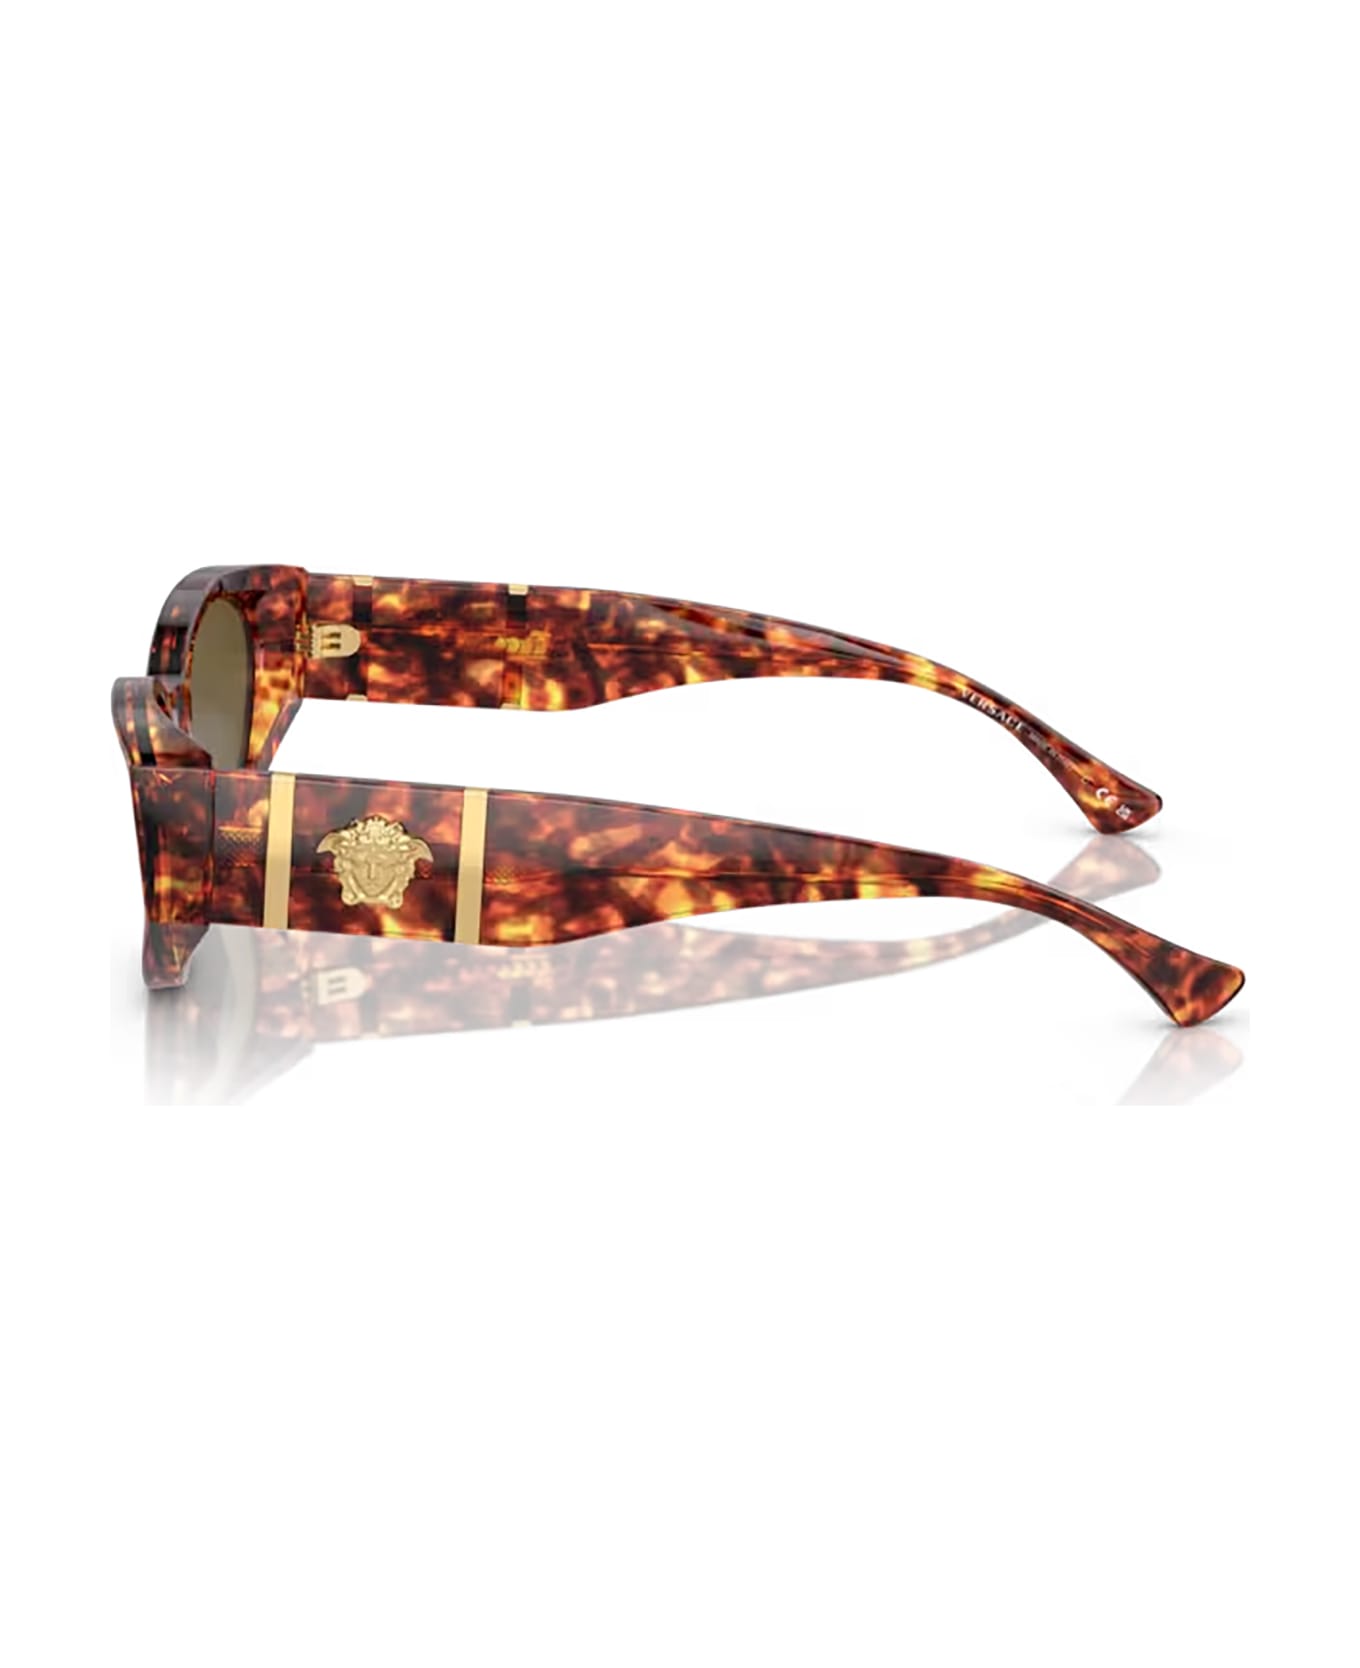 Versace Eyewear Ve4454 Havana Sunglasses - Havana サングラス